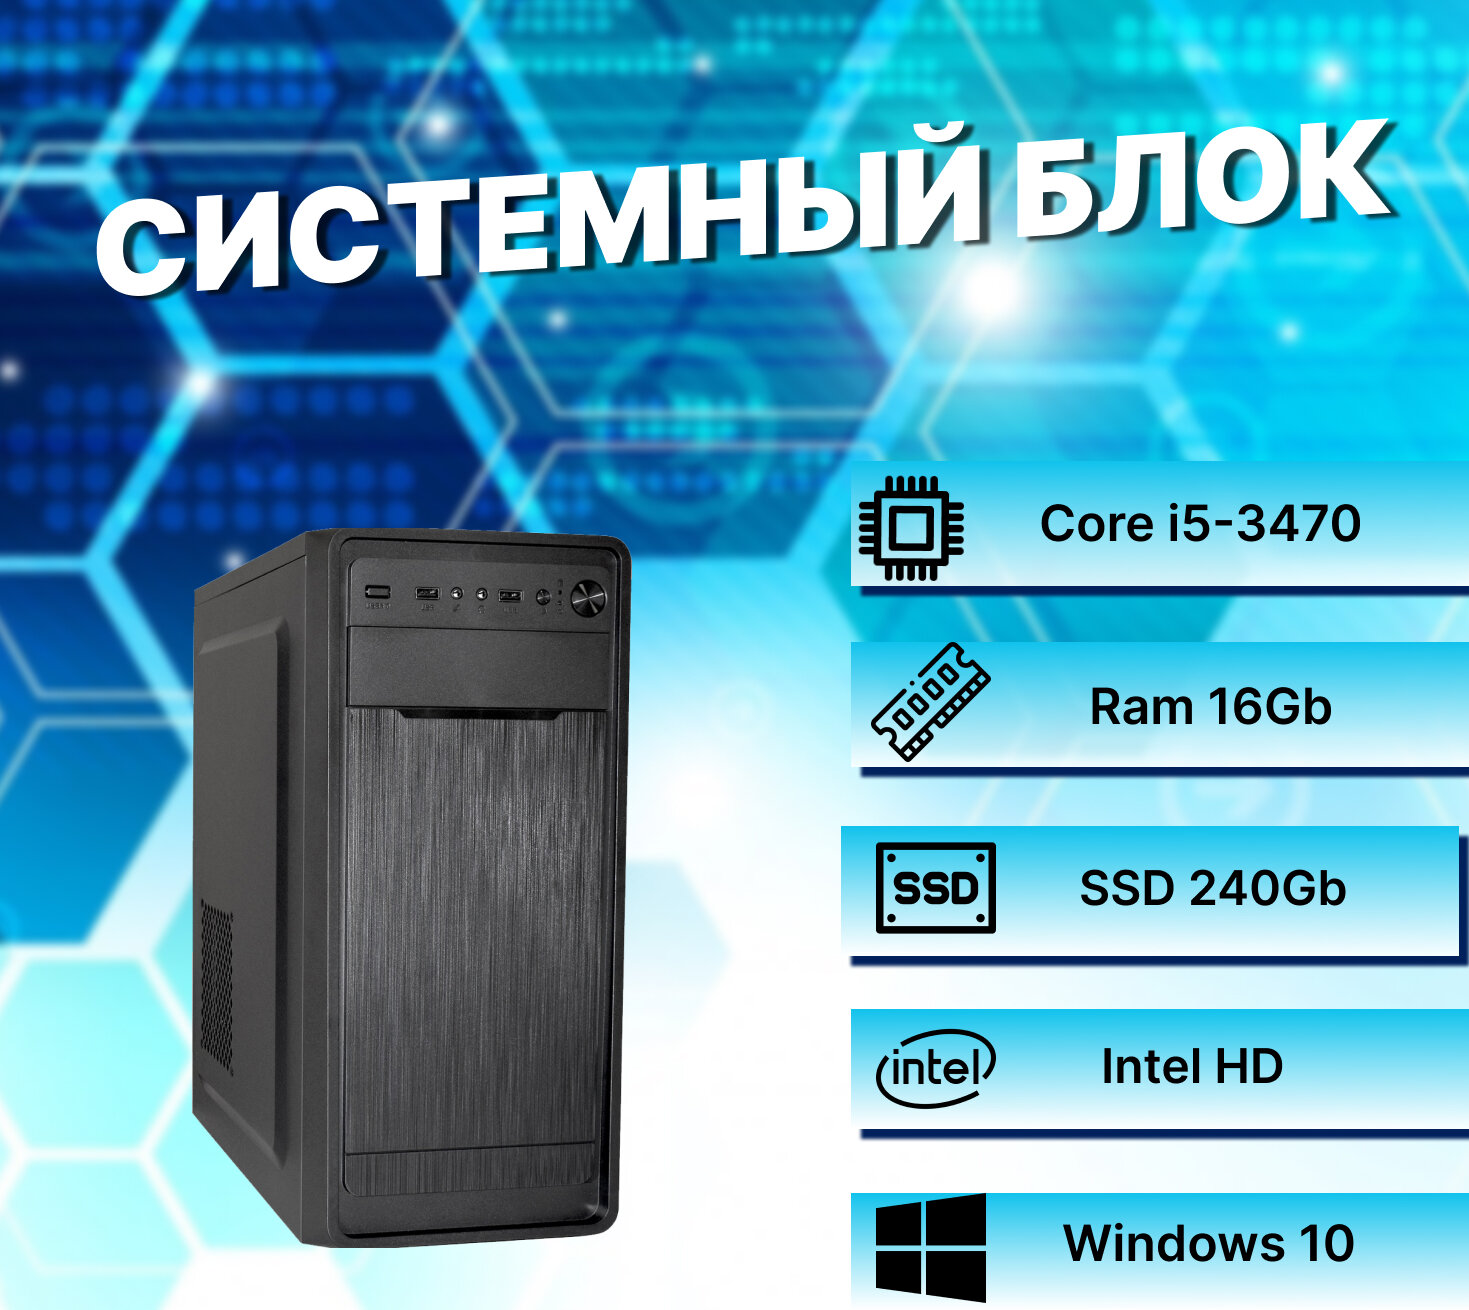 Системный блок Intel Core I5-3470 (3.2ГГц)/ RAM 16Gb/ SSD 240Gb/ Intel HD/ Windows 10 Pro